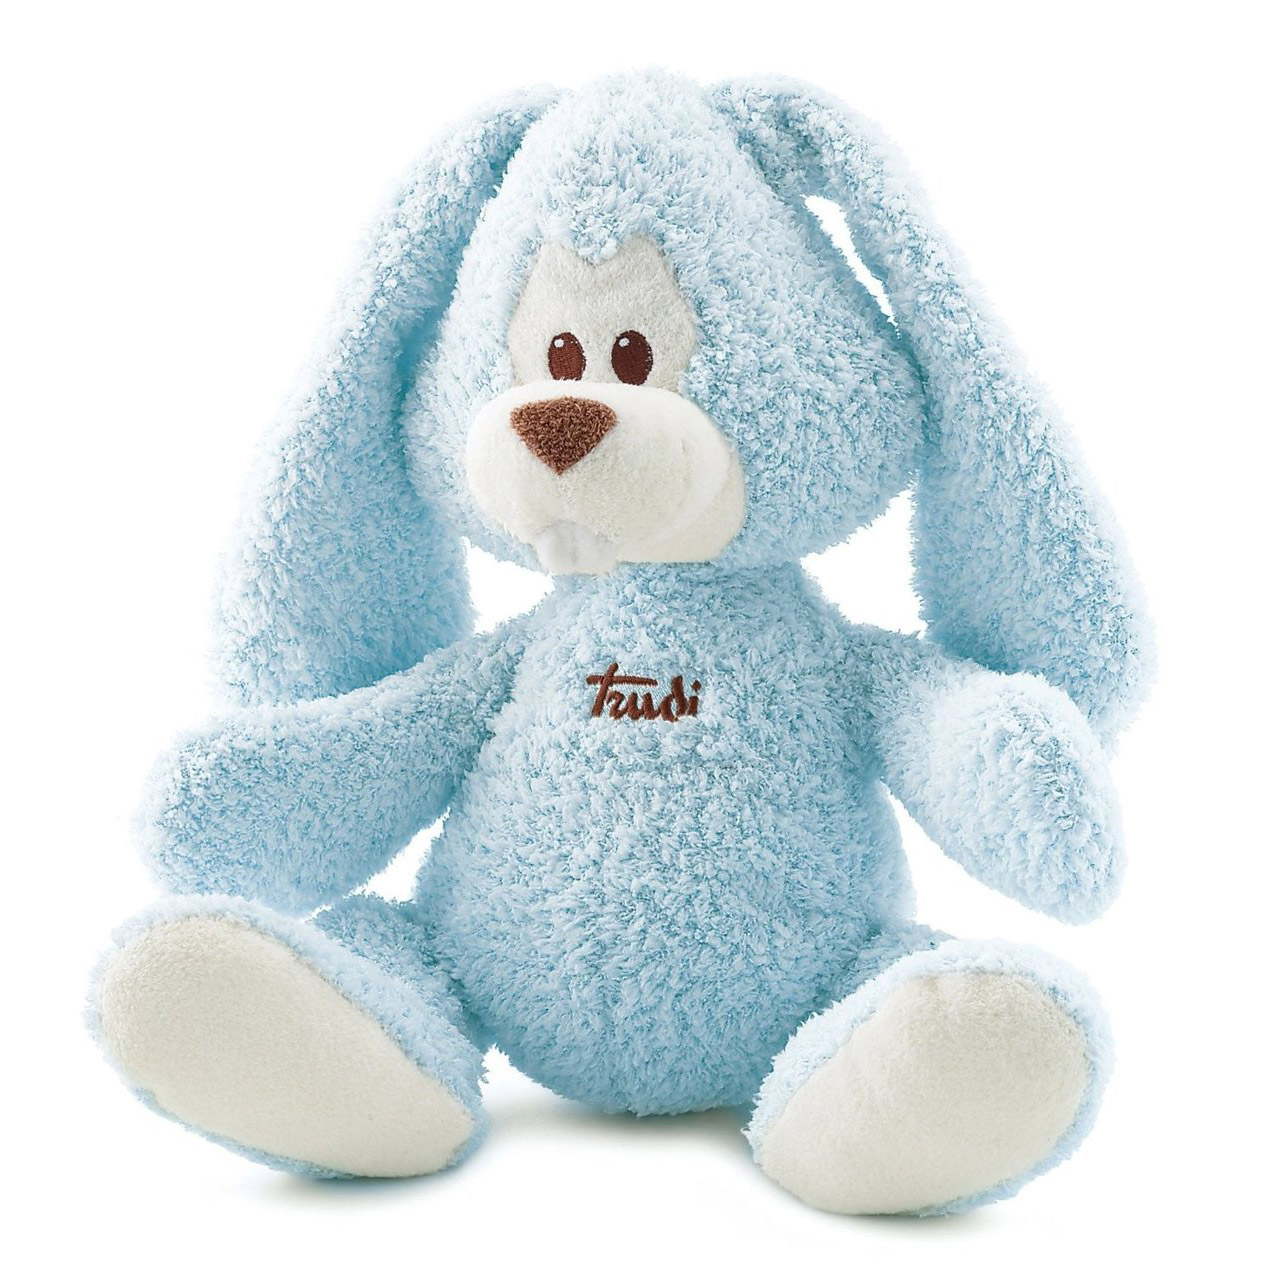 Игрушка заяц. Мягкая игрушка Trudi заяц Вирджилио 50 см. Мягкая игрушка Trudi заяц Вирджилио голубой 36 см. Заяц Роберт Trudi. Мягкая игрушка Trudi заяц Вирджилио розовый 36 см.